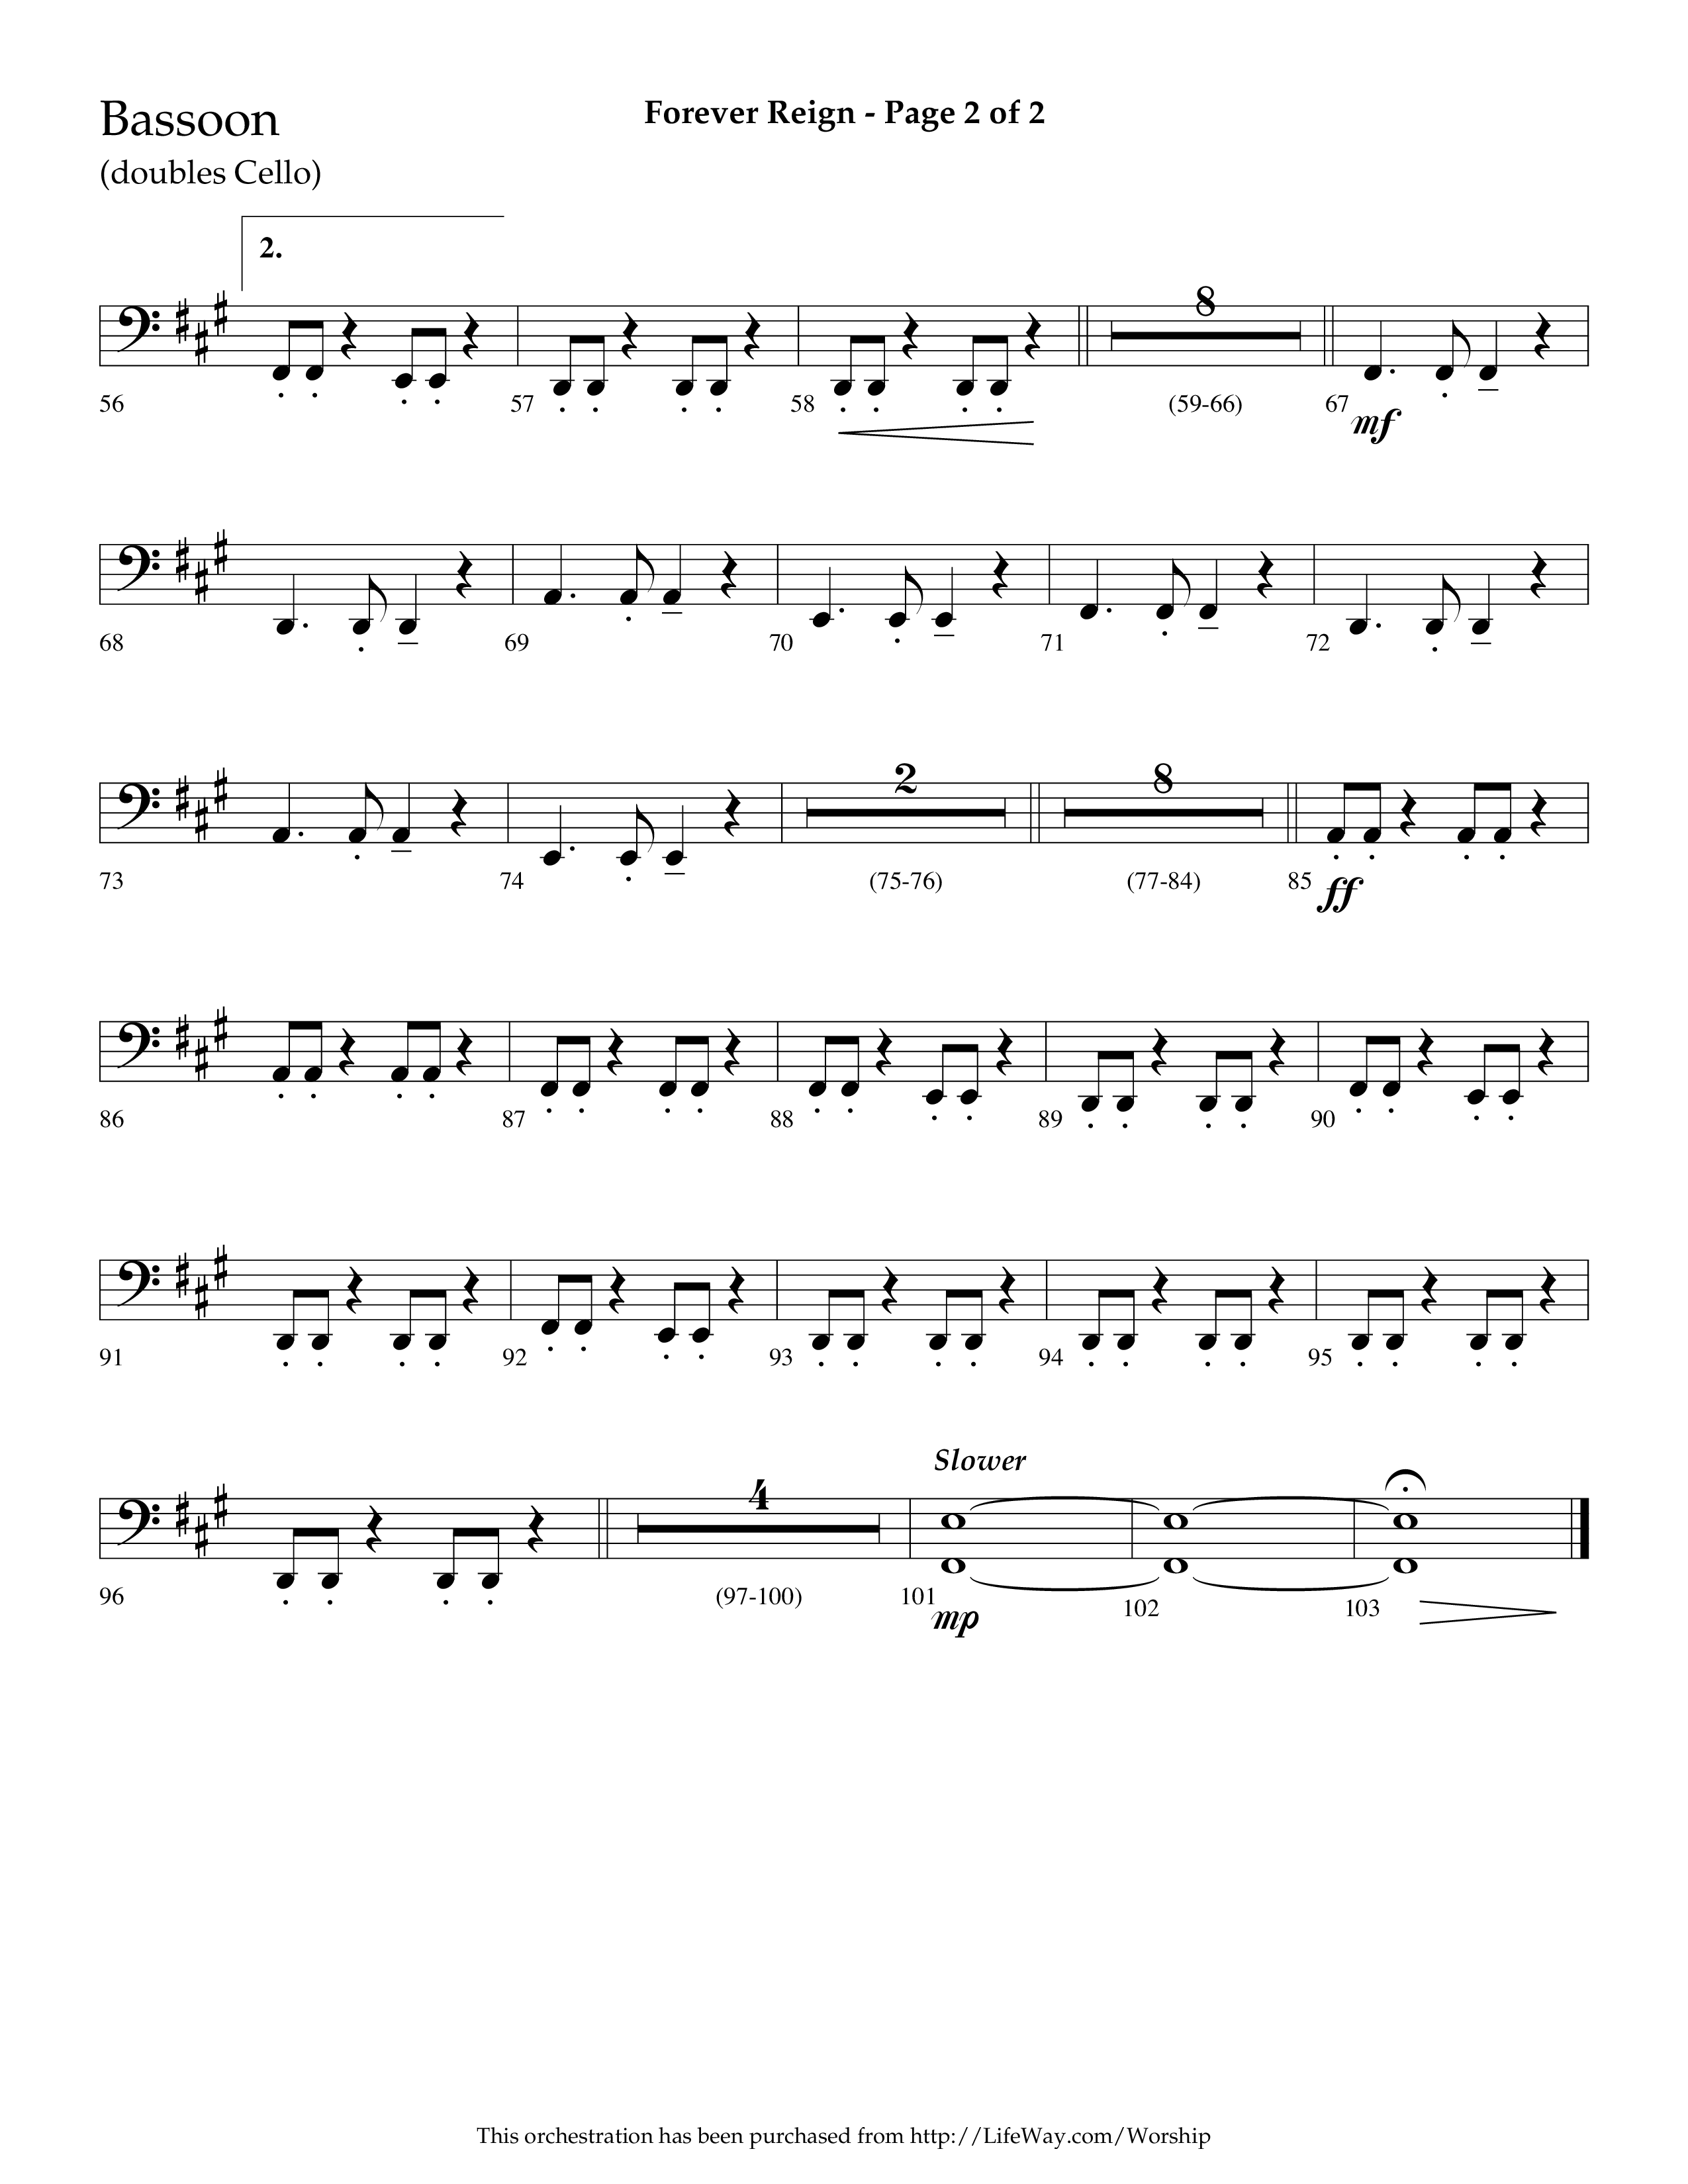 Forever Reign (Choral Anthem SATB) Bassoon (Lifeway Choral / Arr. Dave Williamson)